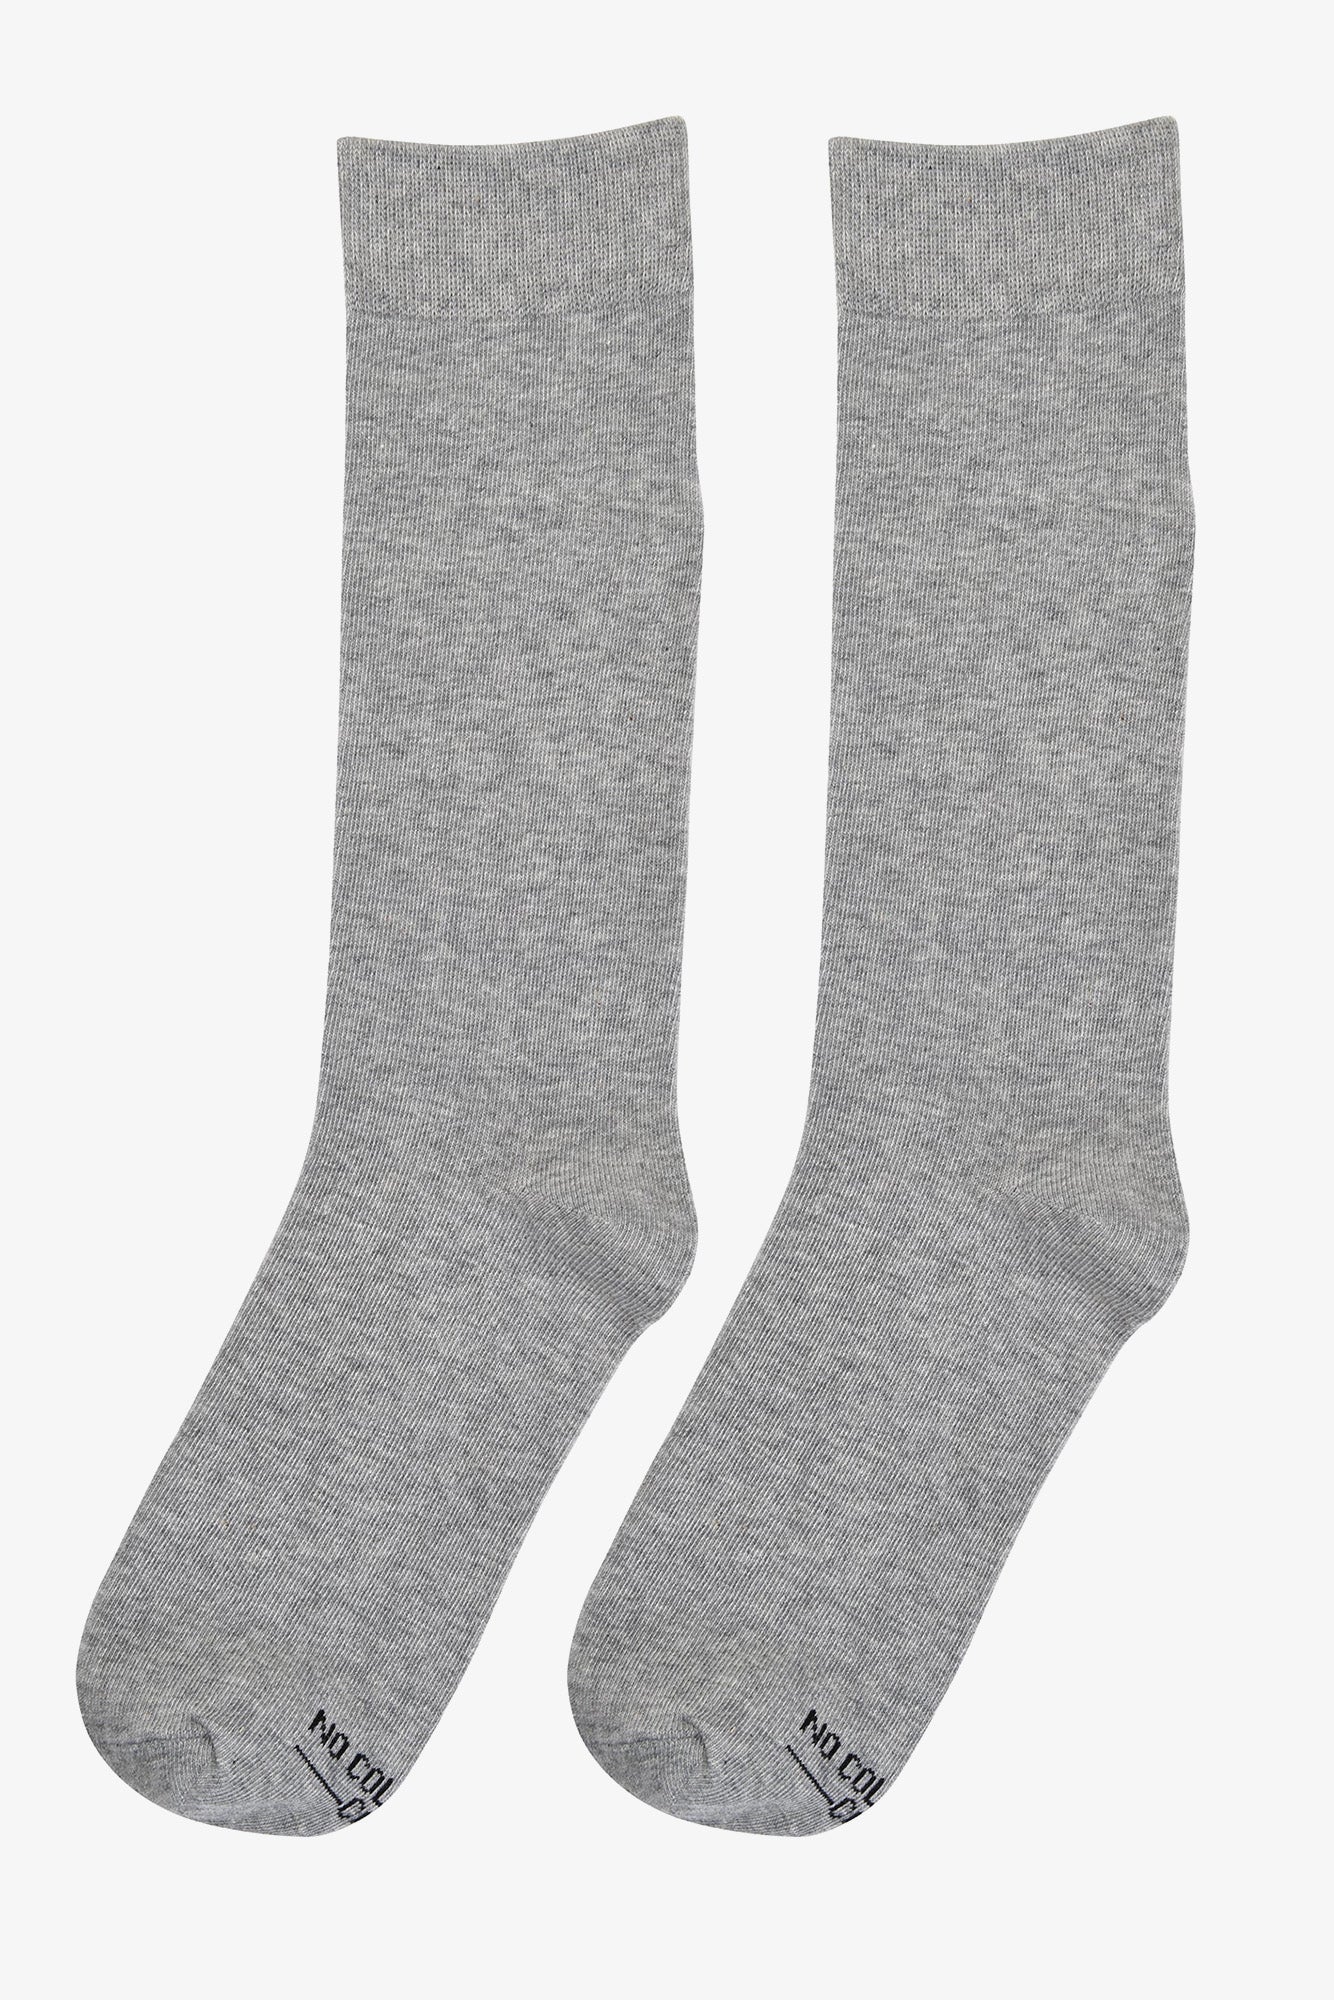 Solid Grey Groomsmen Socks by No Cold Feet